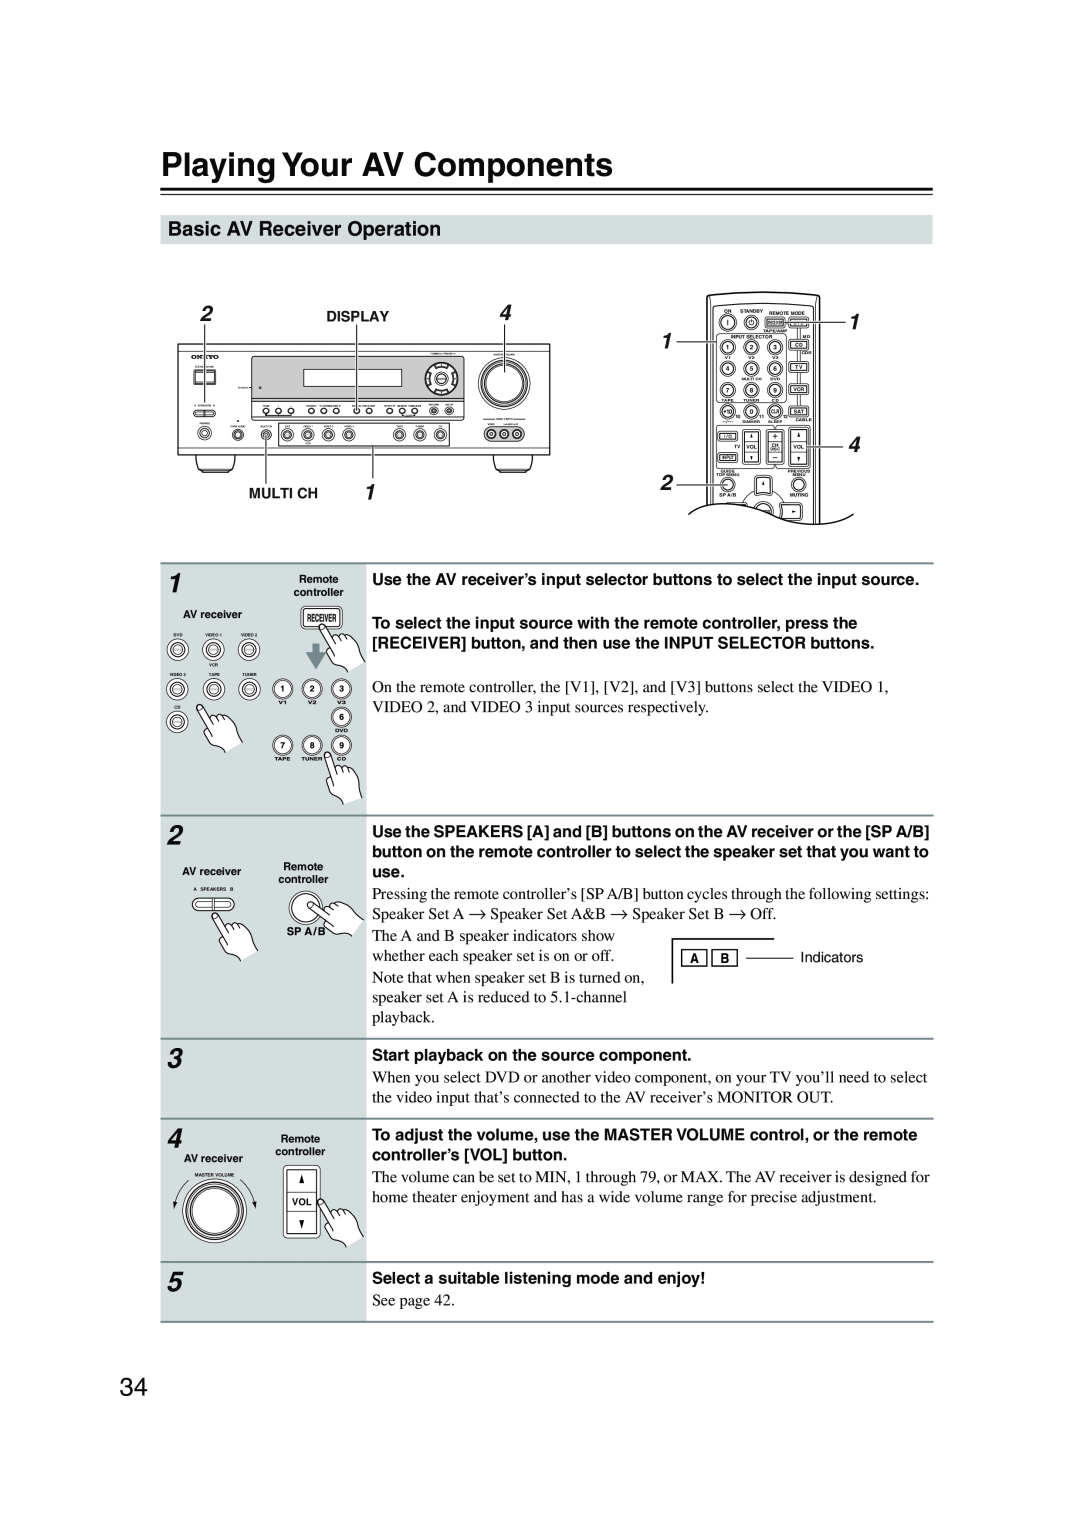 Onkyo TX-SR8350, TX-SR503E instruction manual Playing Your AV Components, Basic AV Receiver Operation 